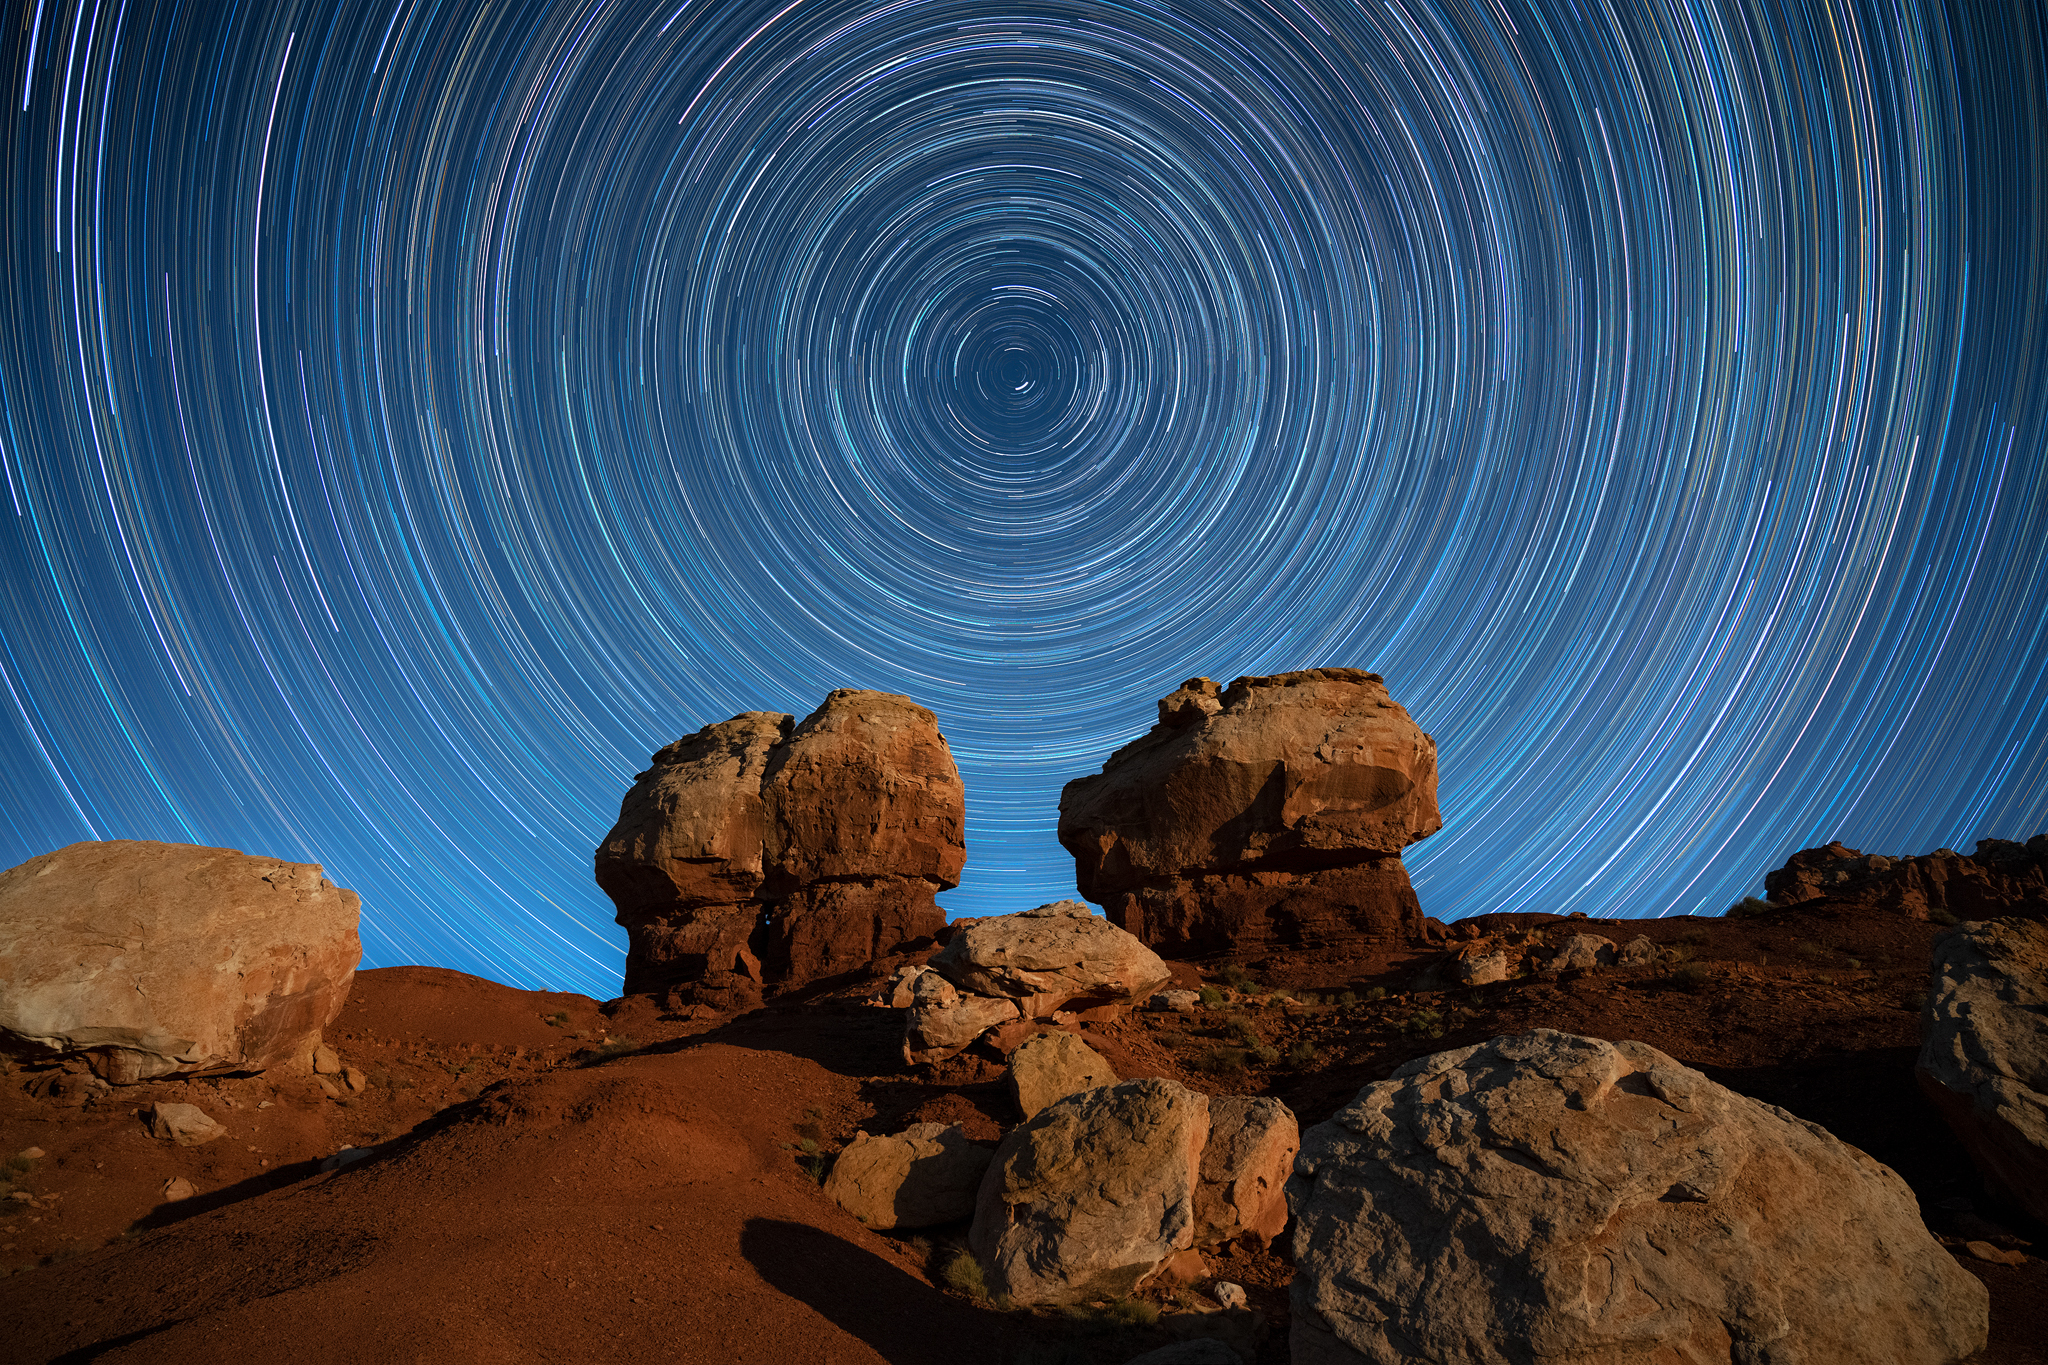 circumpolar star trails above twin rock formations